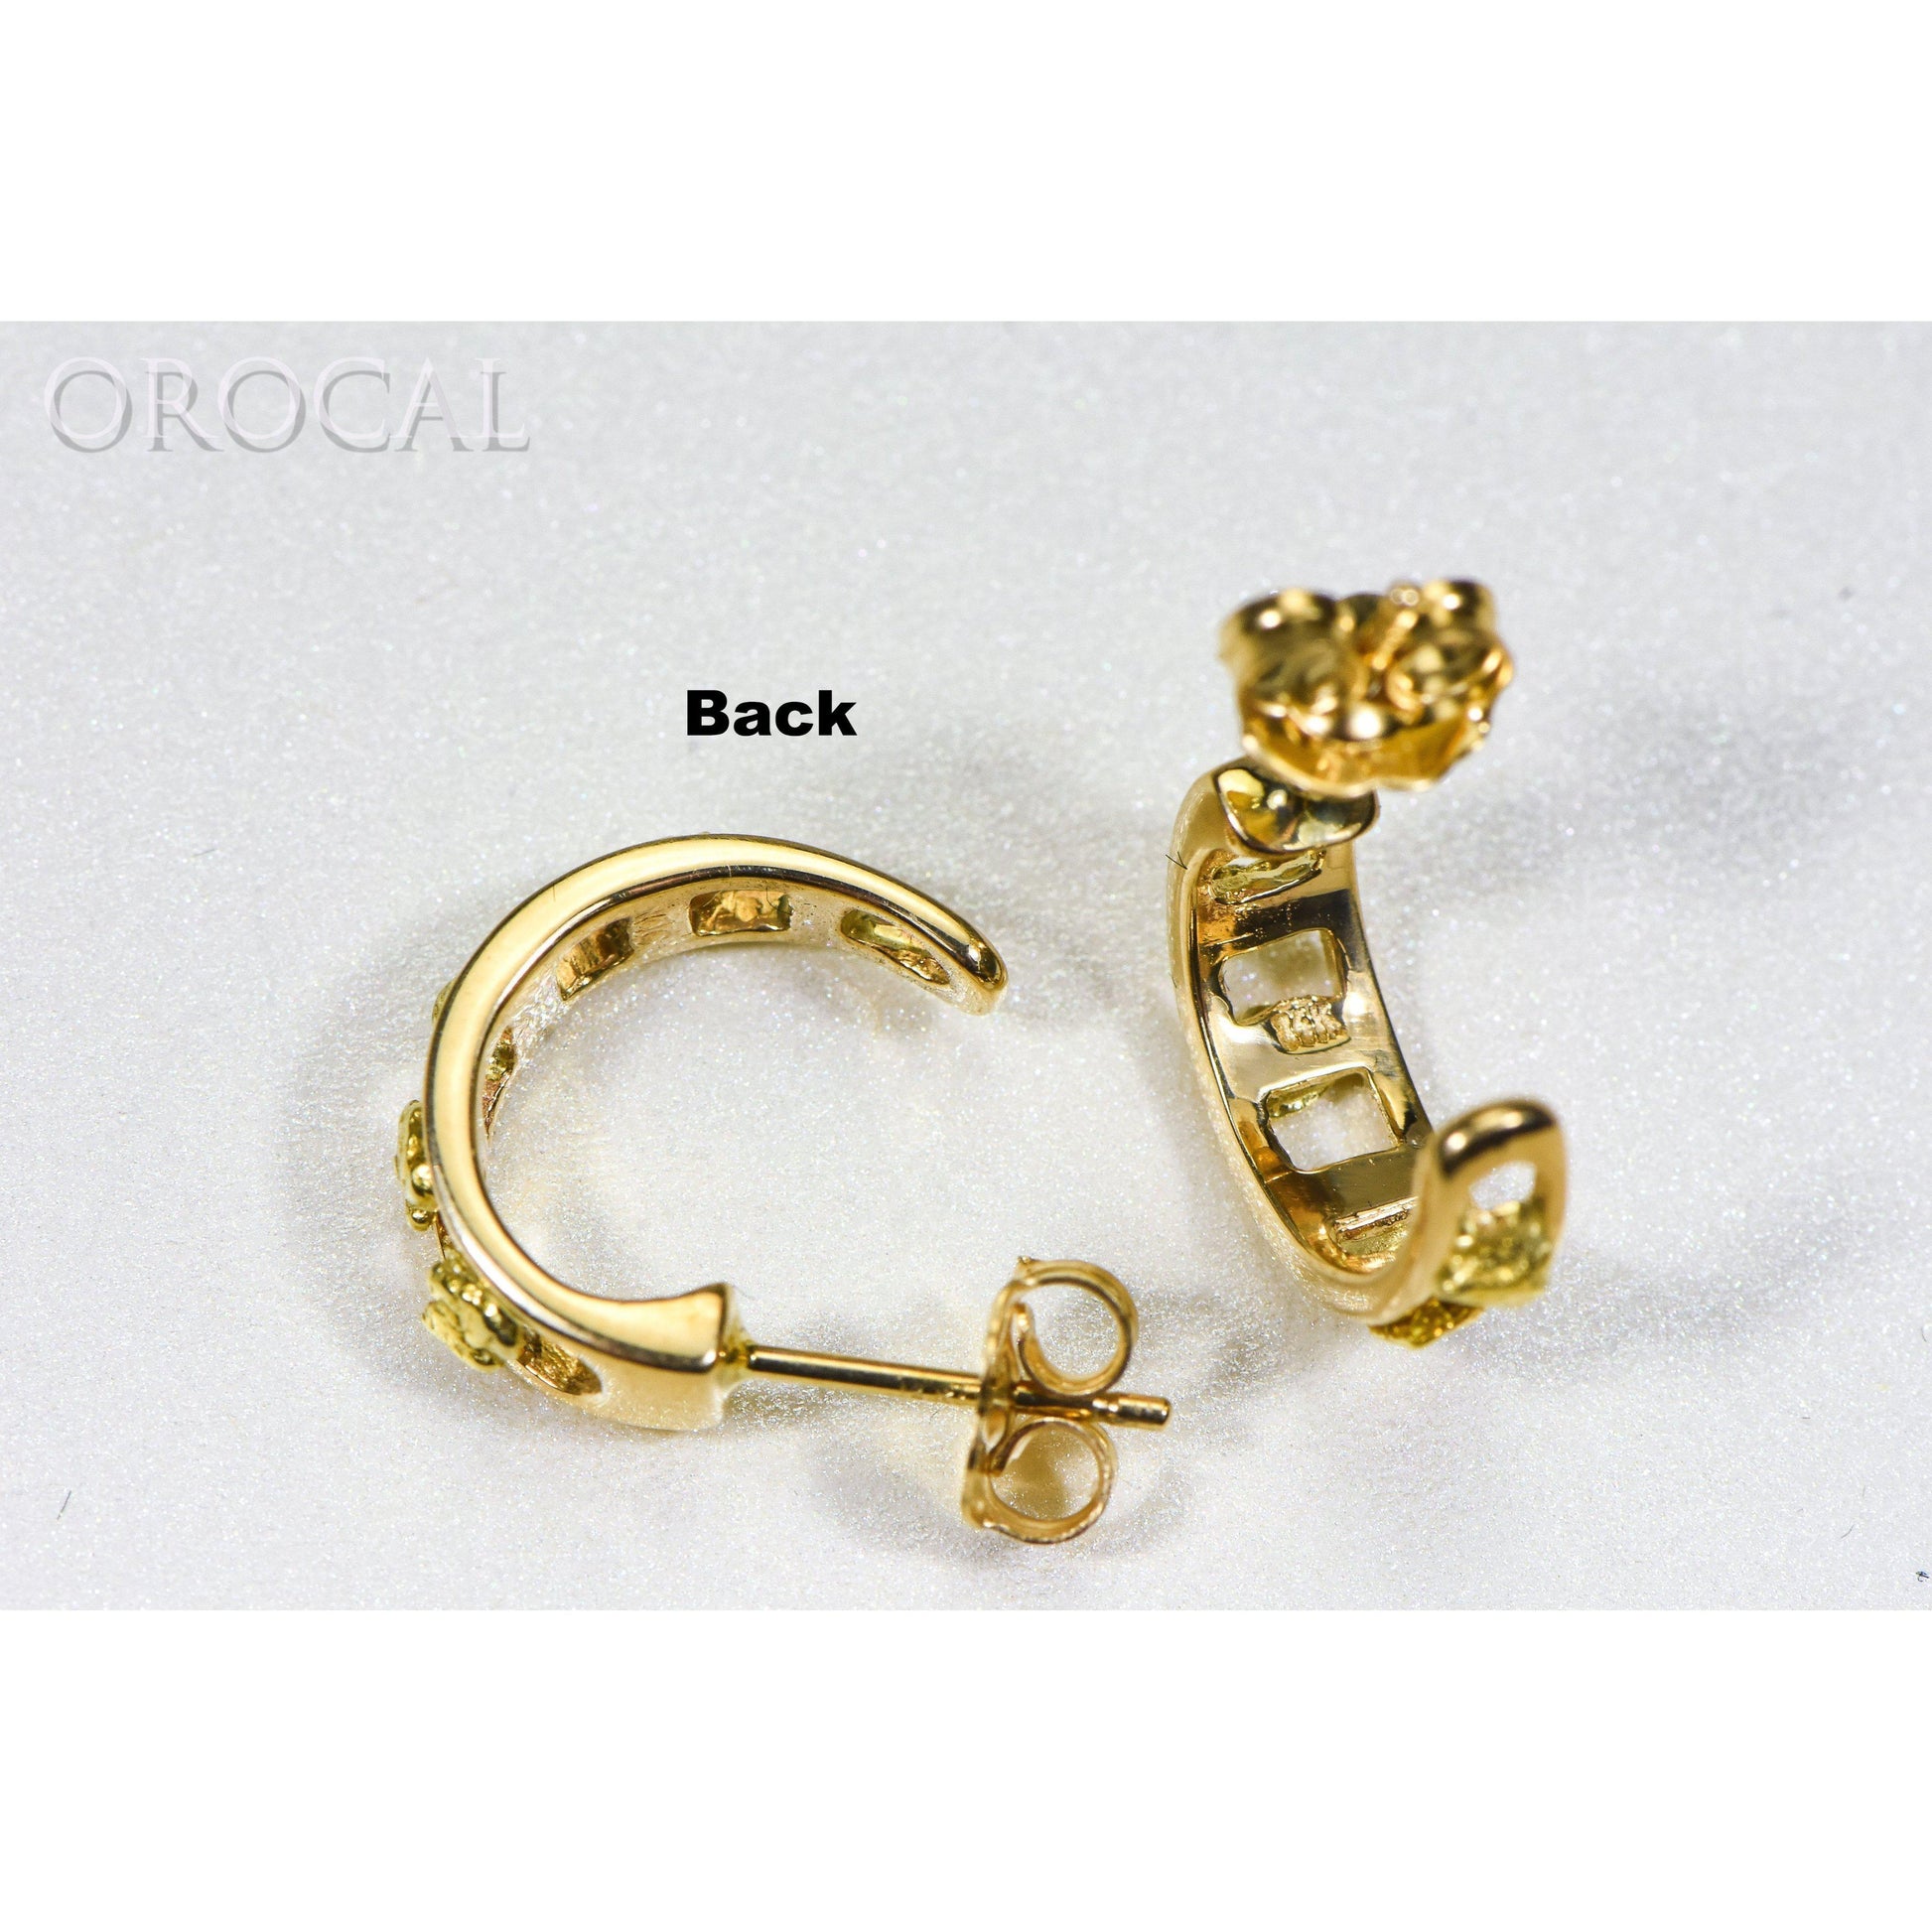 Gold Nugget Earrings -EH18-Destination Gold Detectors